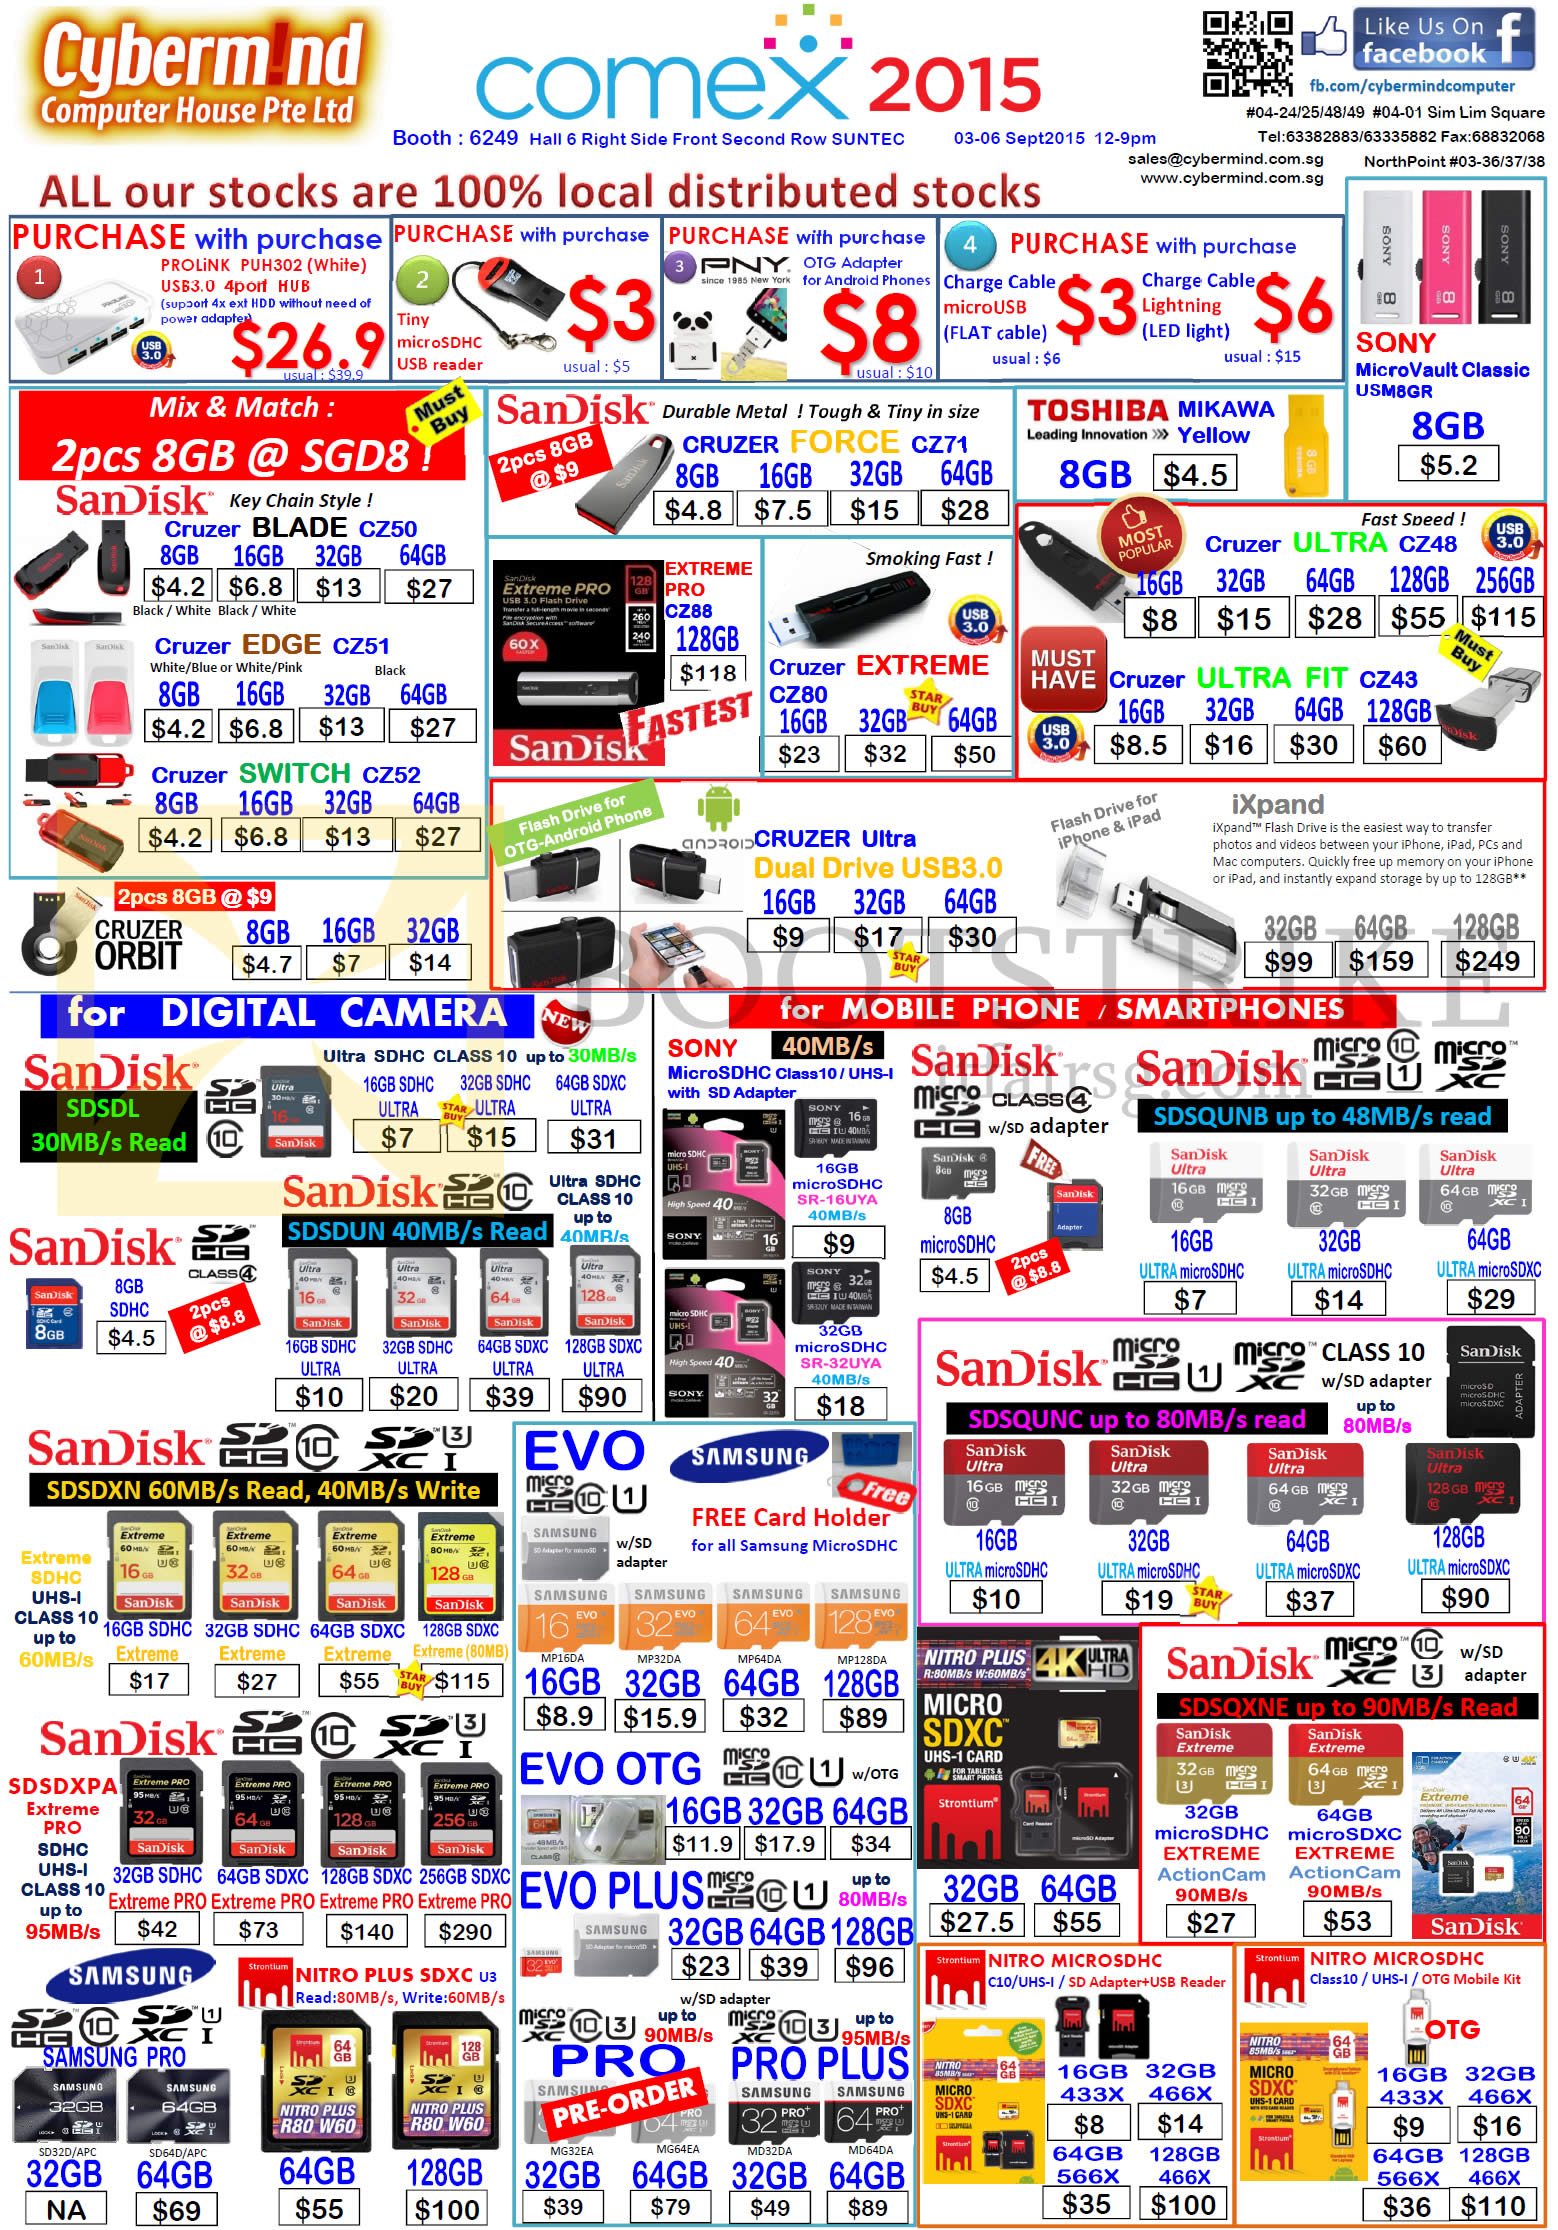 COMEX 2015 price list image brochure of Cybermind USB Flash Drives, Memory SD Cards, MicroSD, Sandisk, Toshiba, Sony, Evo, Nitro, Cruzer, EVO OTG, EVO Plus